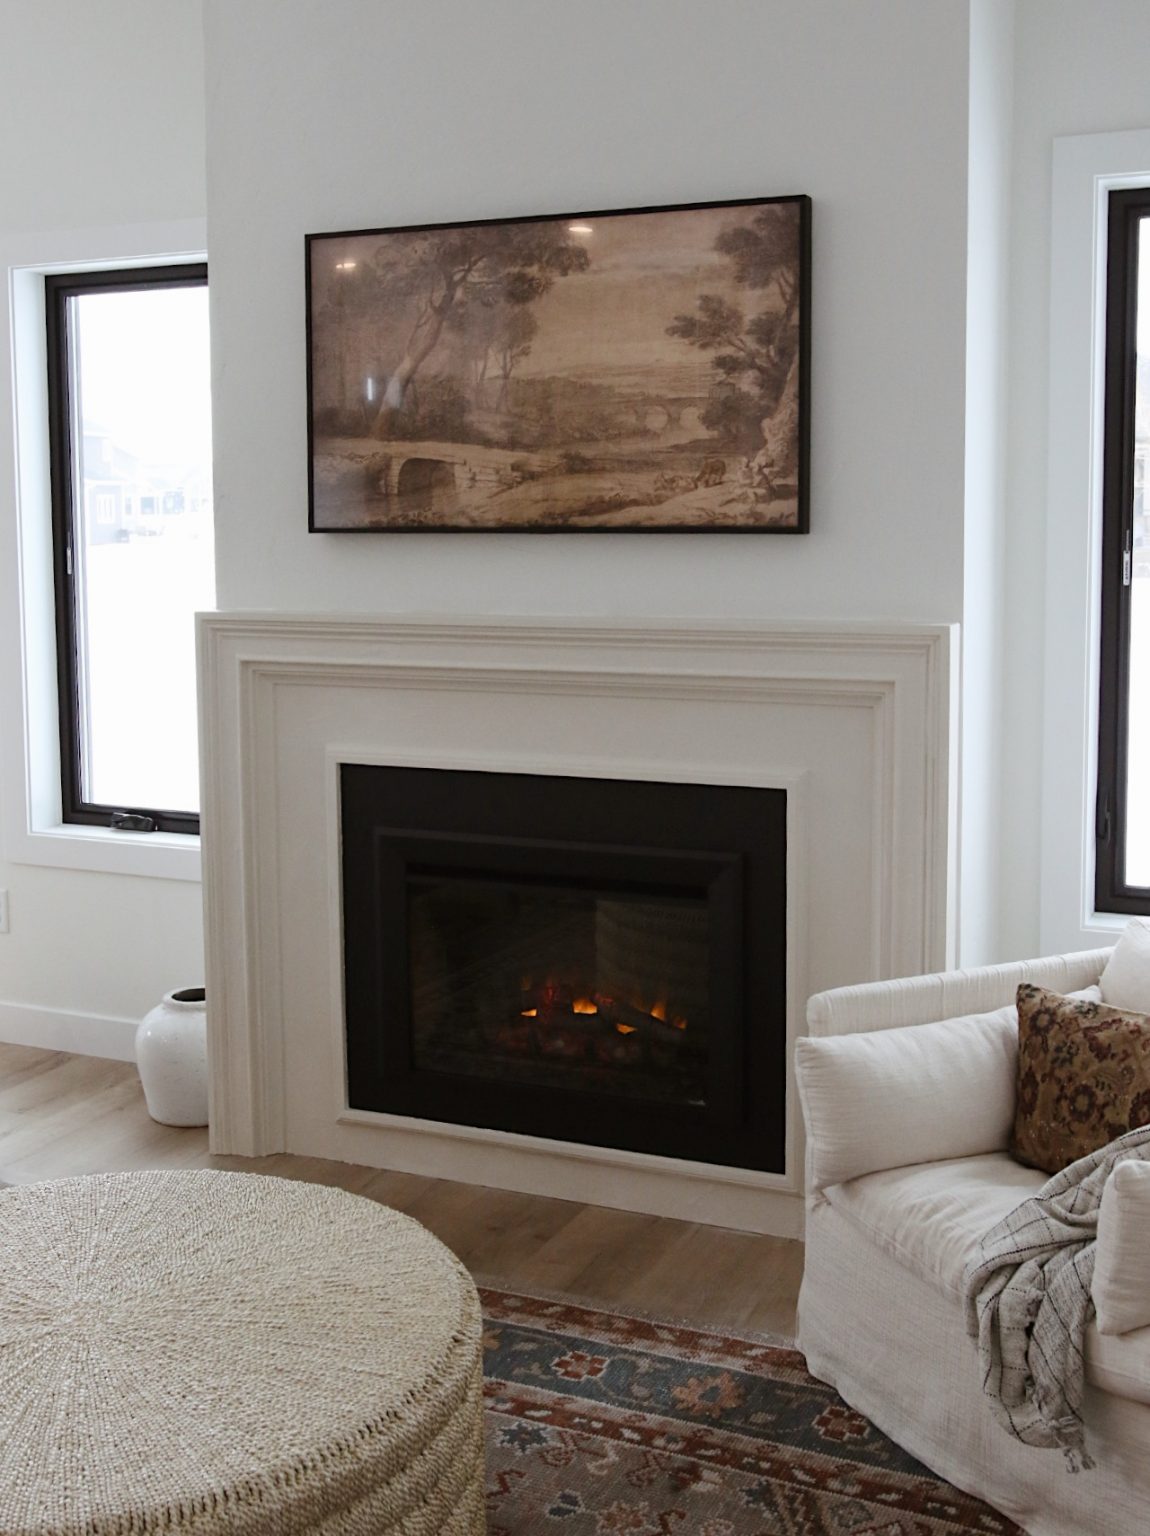 plaster fireplace surround